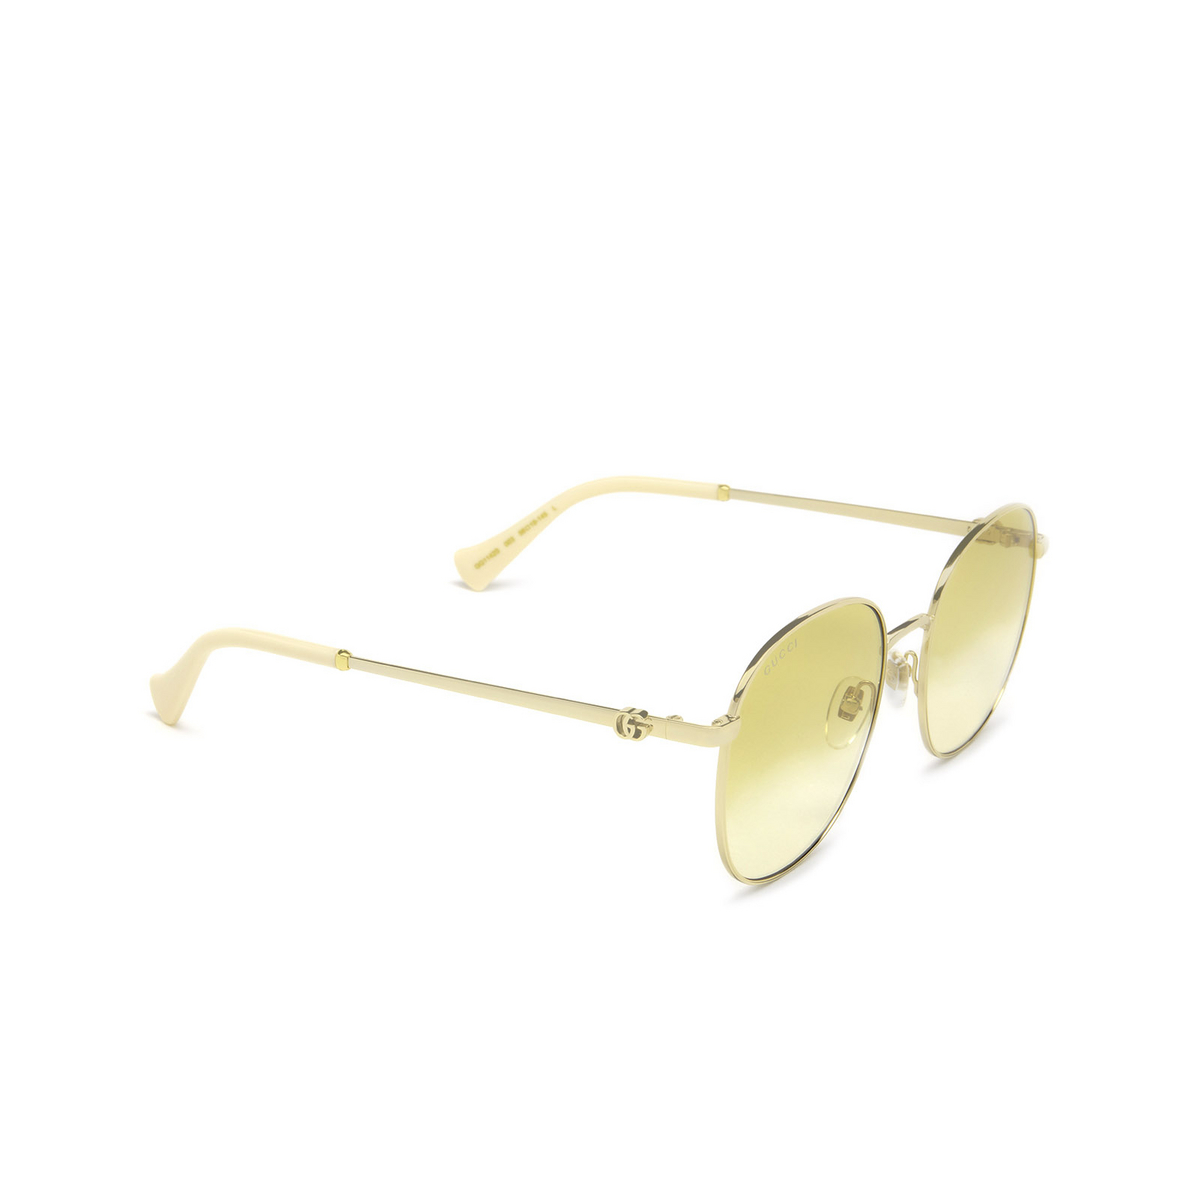 Gucci® Round Sunglasses: GG1142S color Gold 003 - three-quarters view.